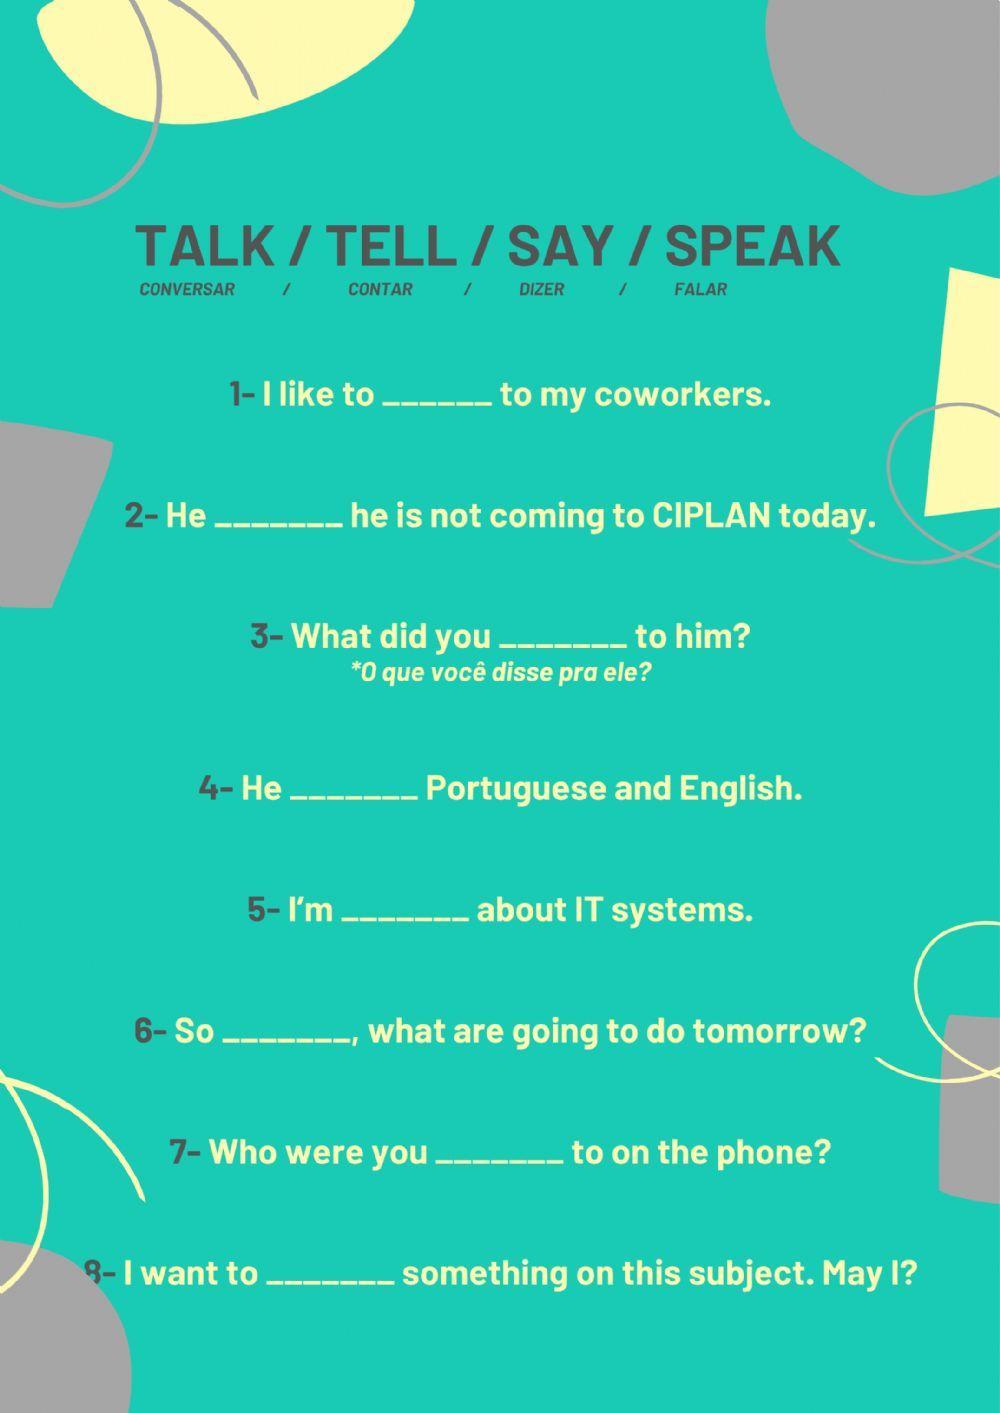 Say, tell, speak and talk